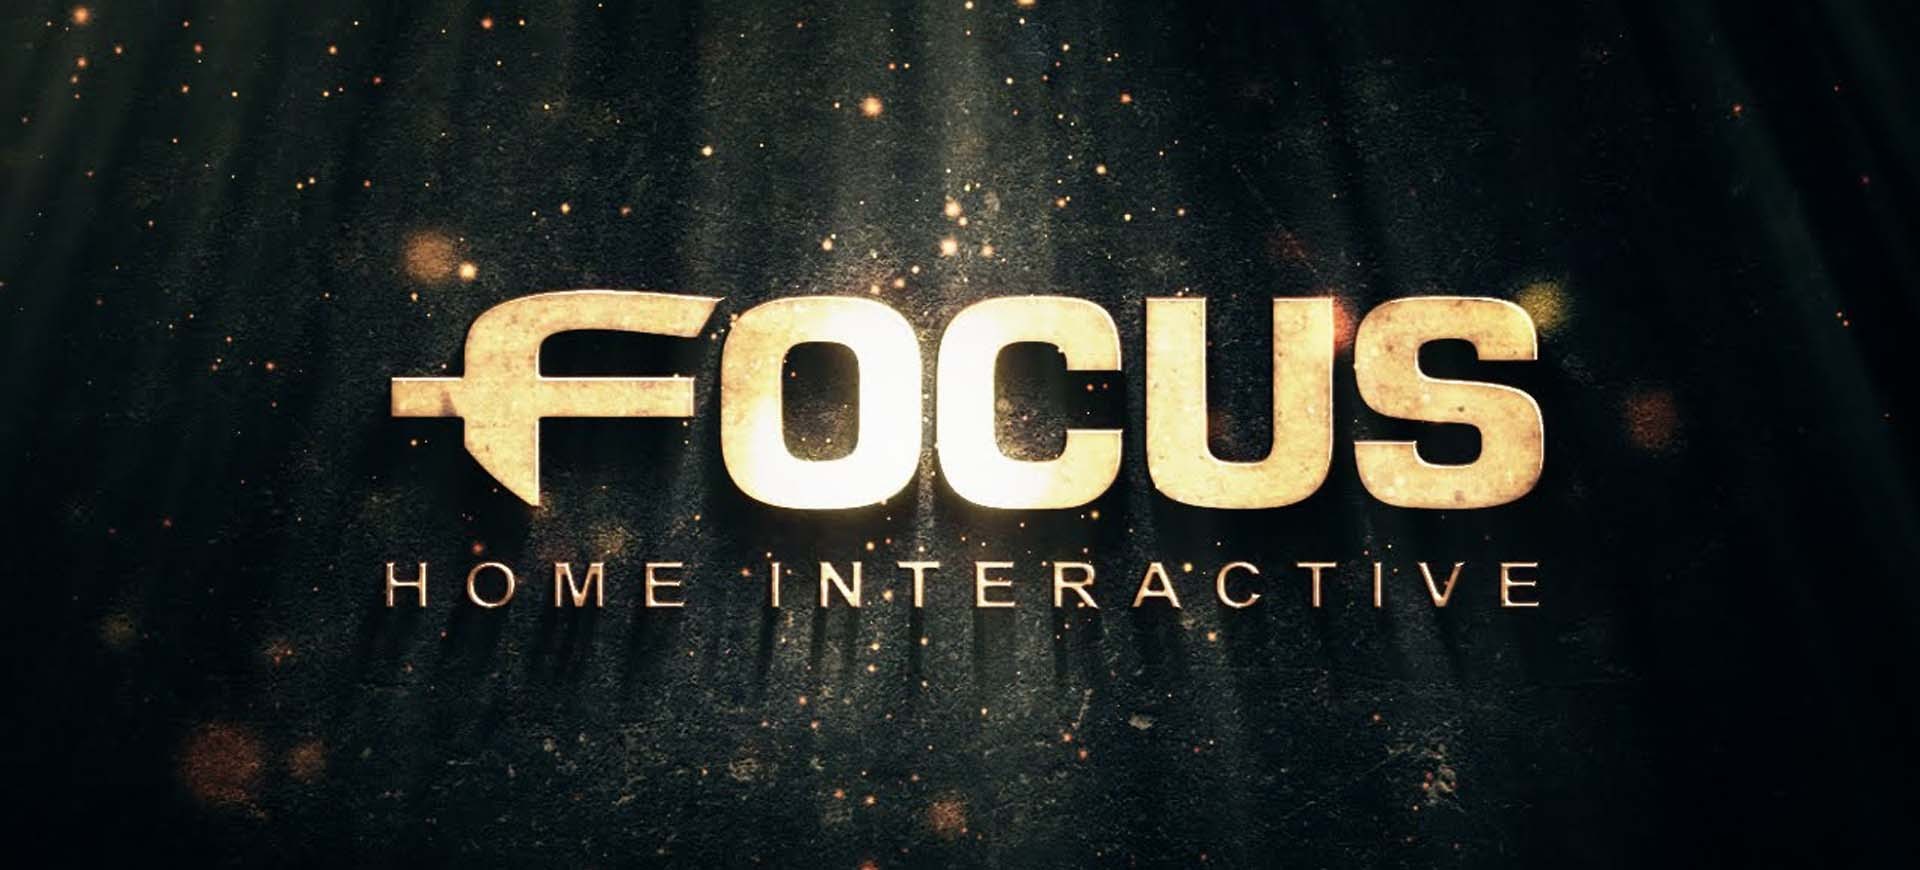 Gamescom 2015: Focus Home Interactive công bố game "tham chiến"